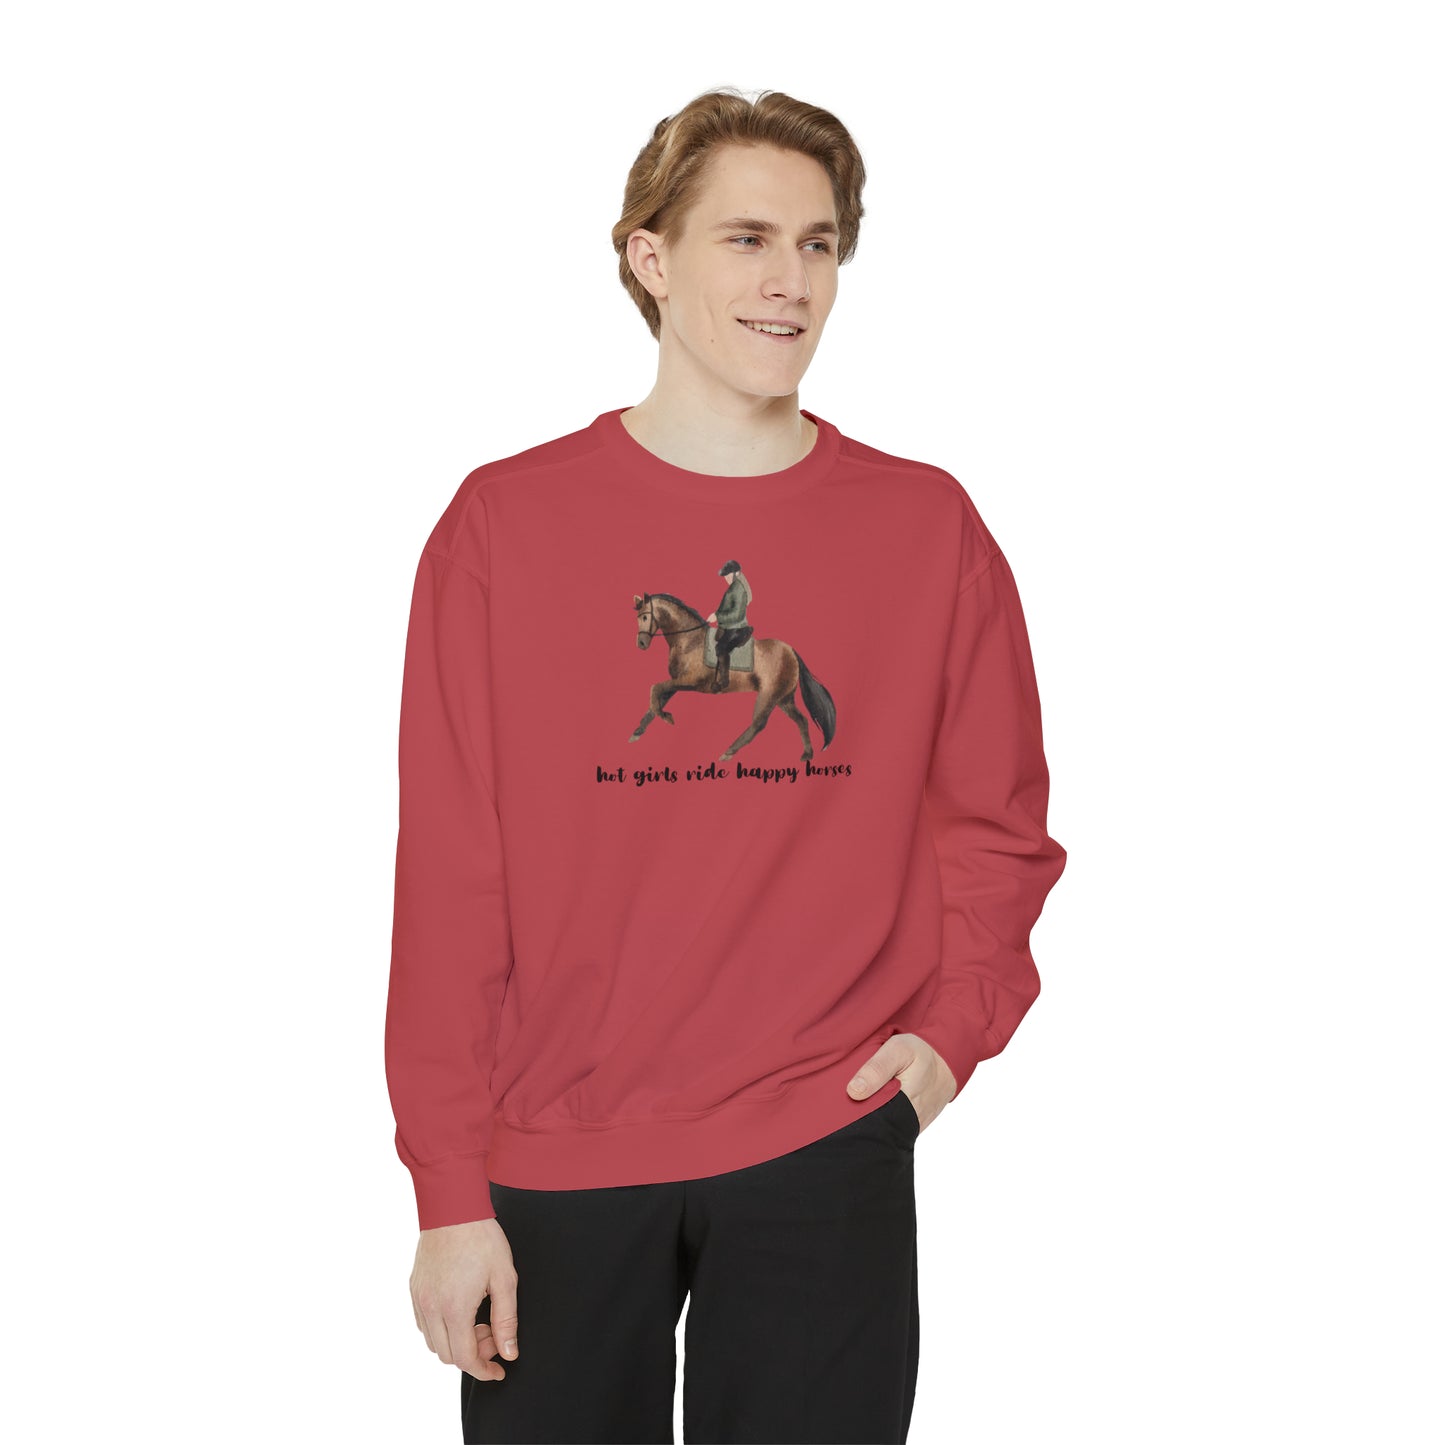 Hot Girls Ride Happy Horses (Dressage) Sweatshirt